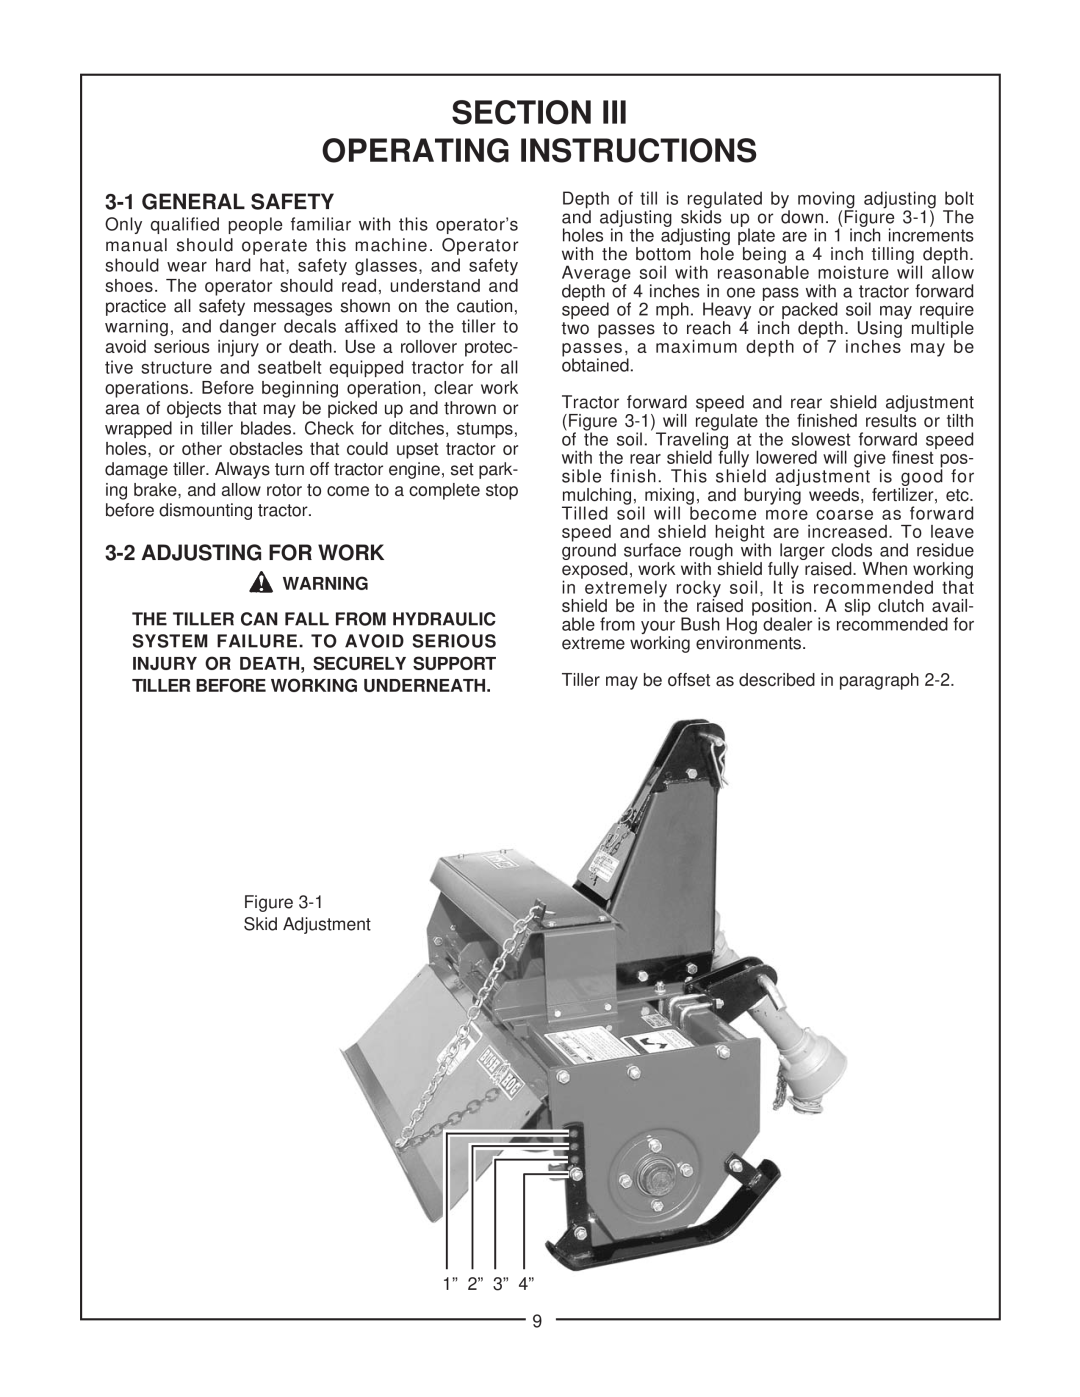 Bush Hog RTS manual Section Operating Instructions, 3-1GENERAL SAFETY, 3-2ADJUSTING FOR WORK 